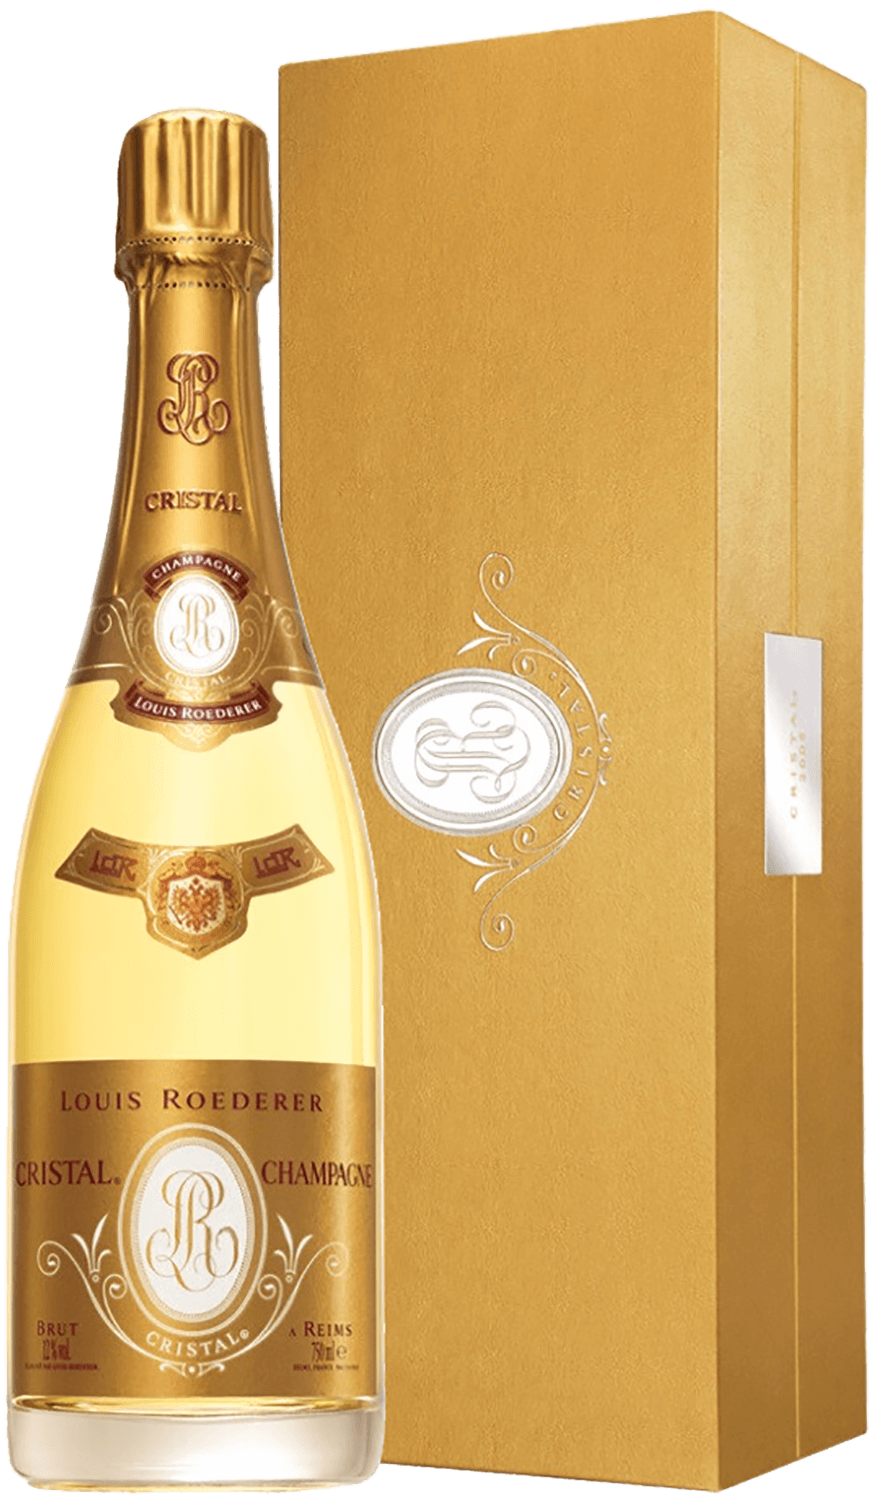 Cristal Brut Champagne AOC Louis Roederer (gift box)